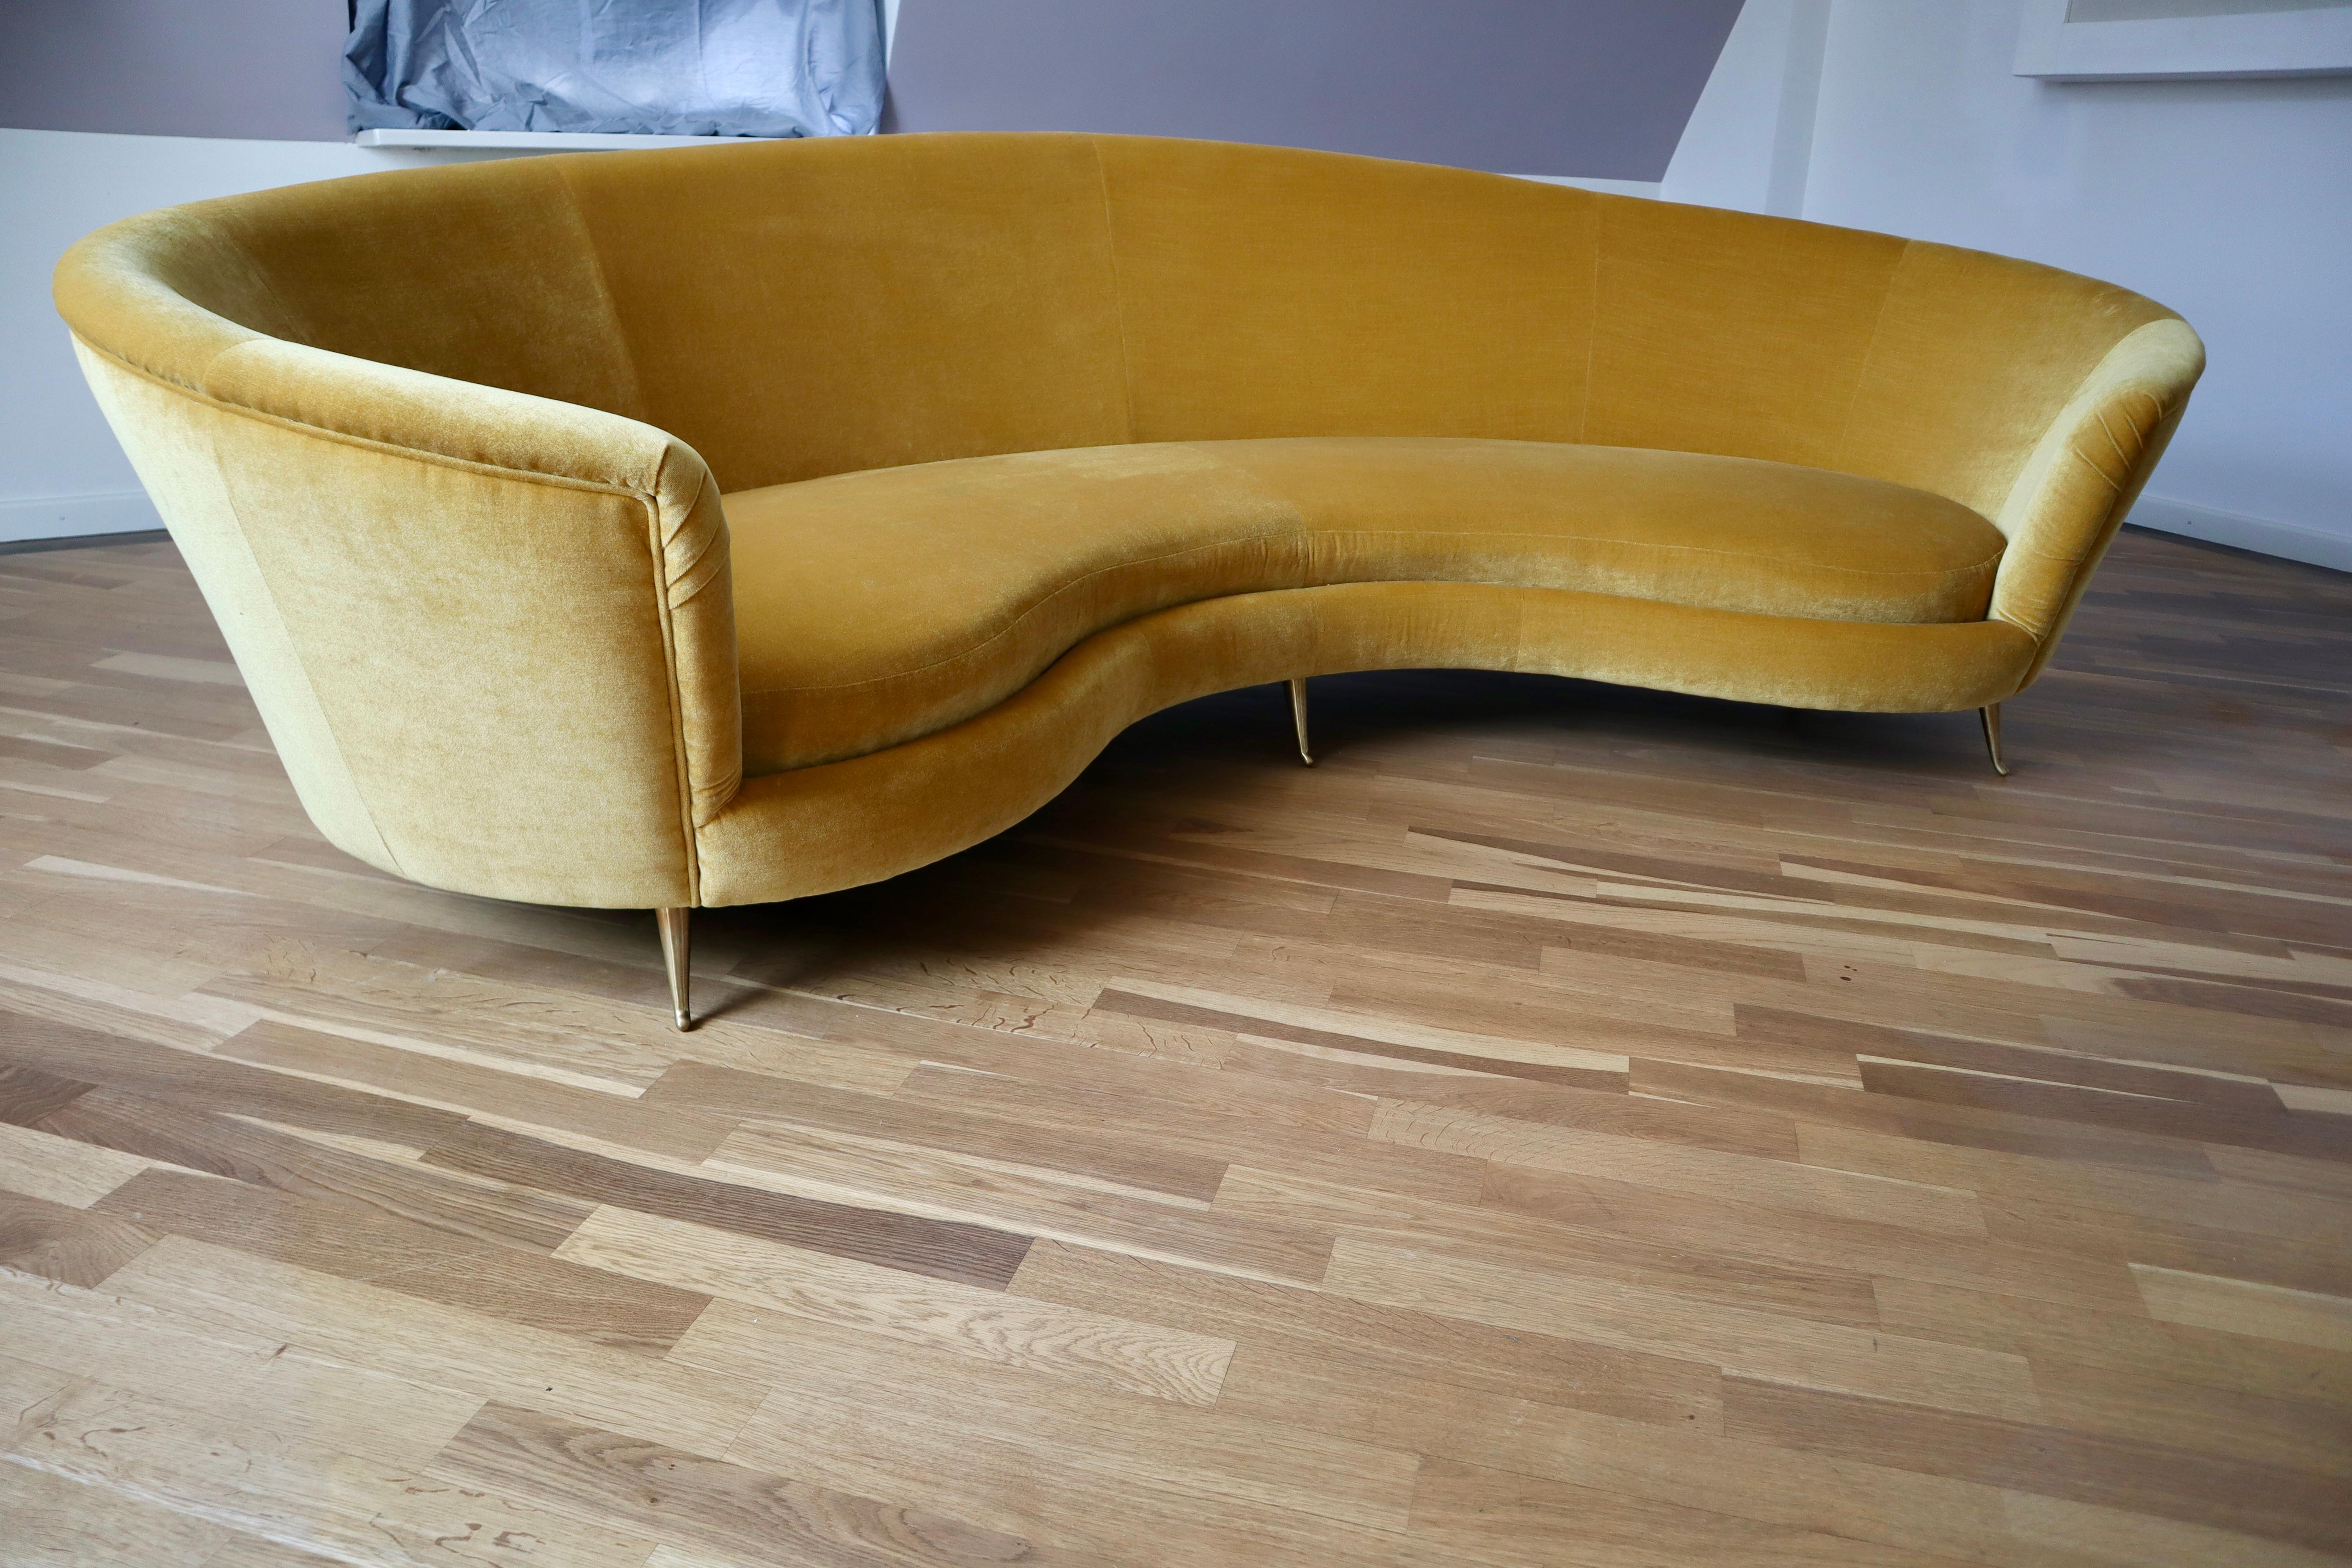 Brass XXL Gio Ponti Style Large Mid Century Modern Italian Crescent Canapé Sofa For Sale